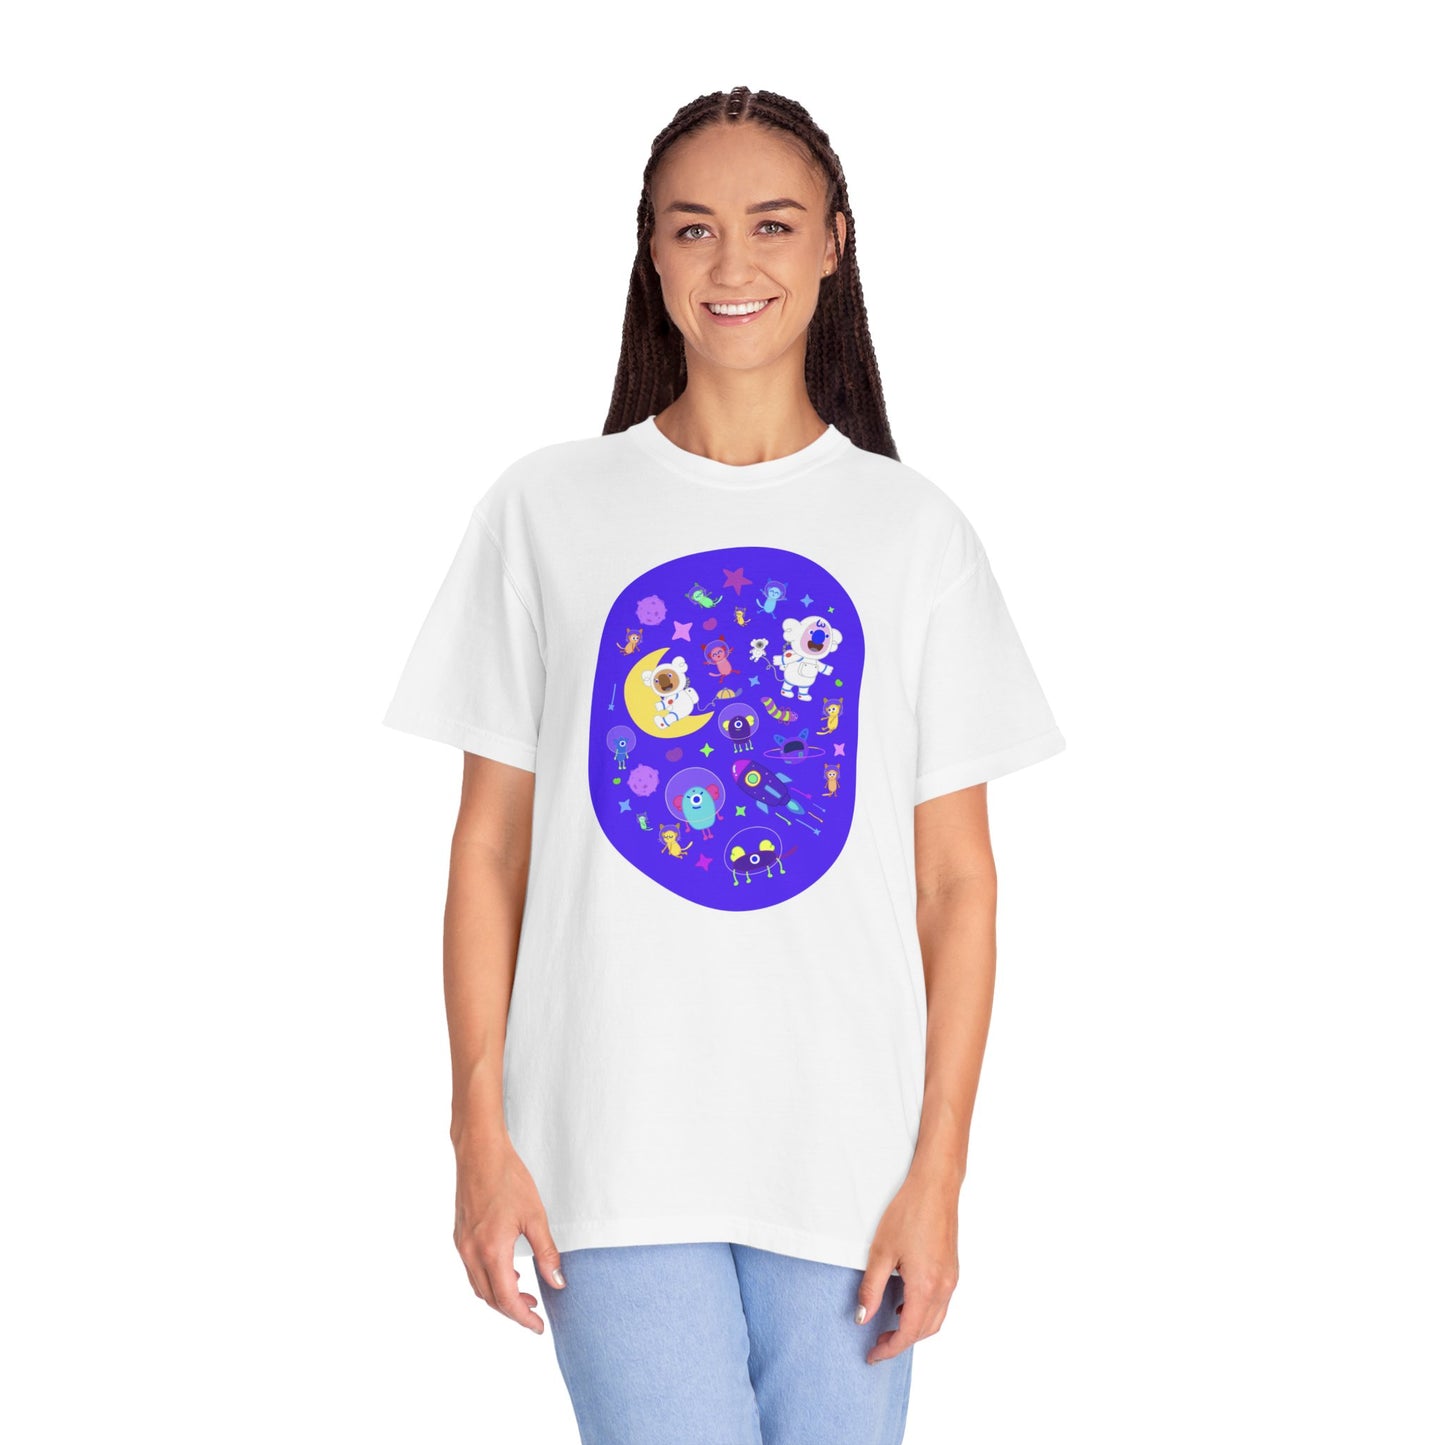 Astro World Adventure Friends T-shirt